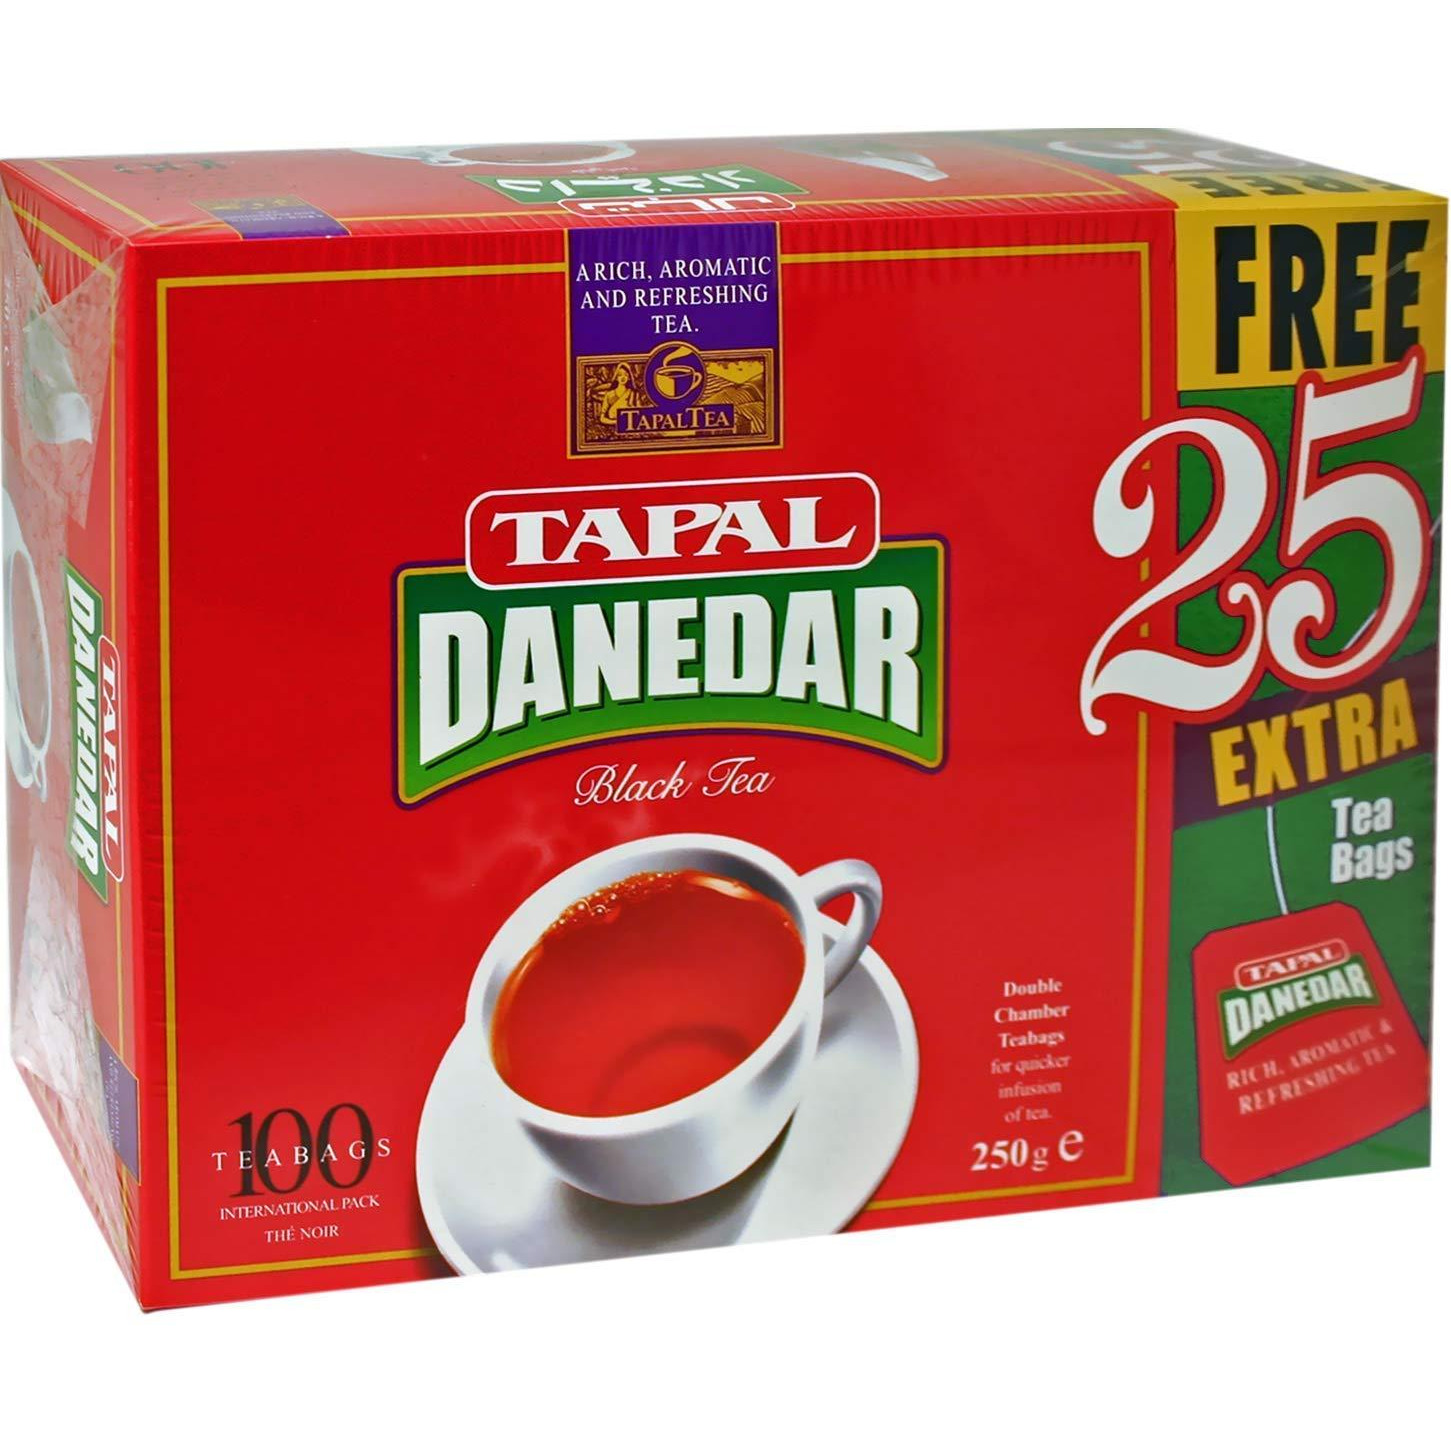 Tapal Danedar Black Tea 990 gms